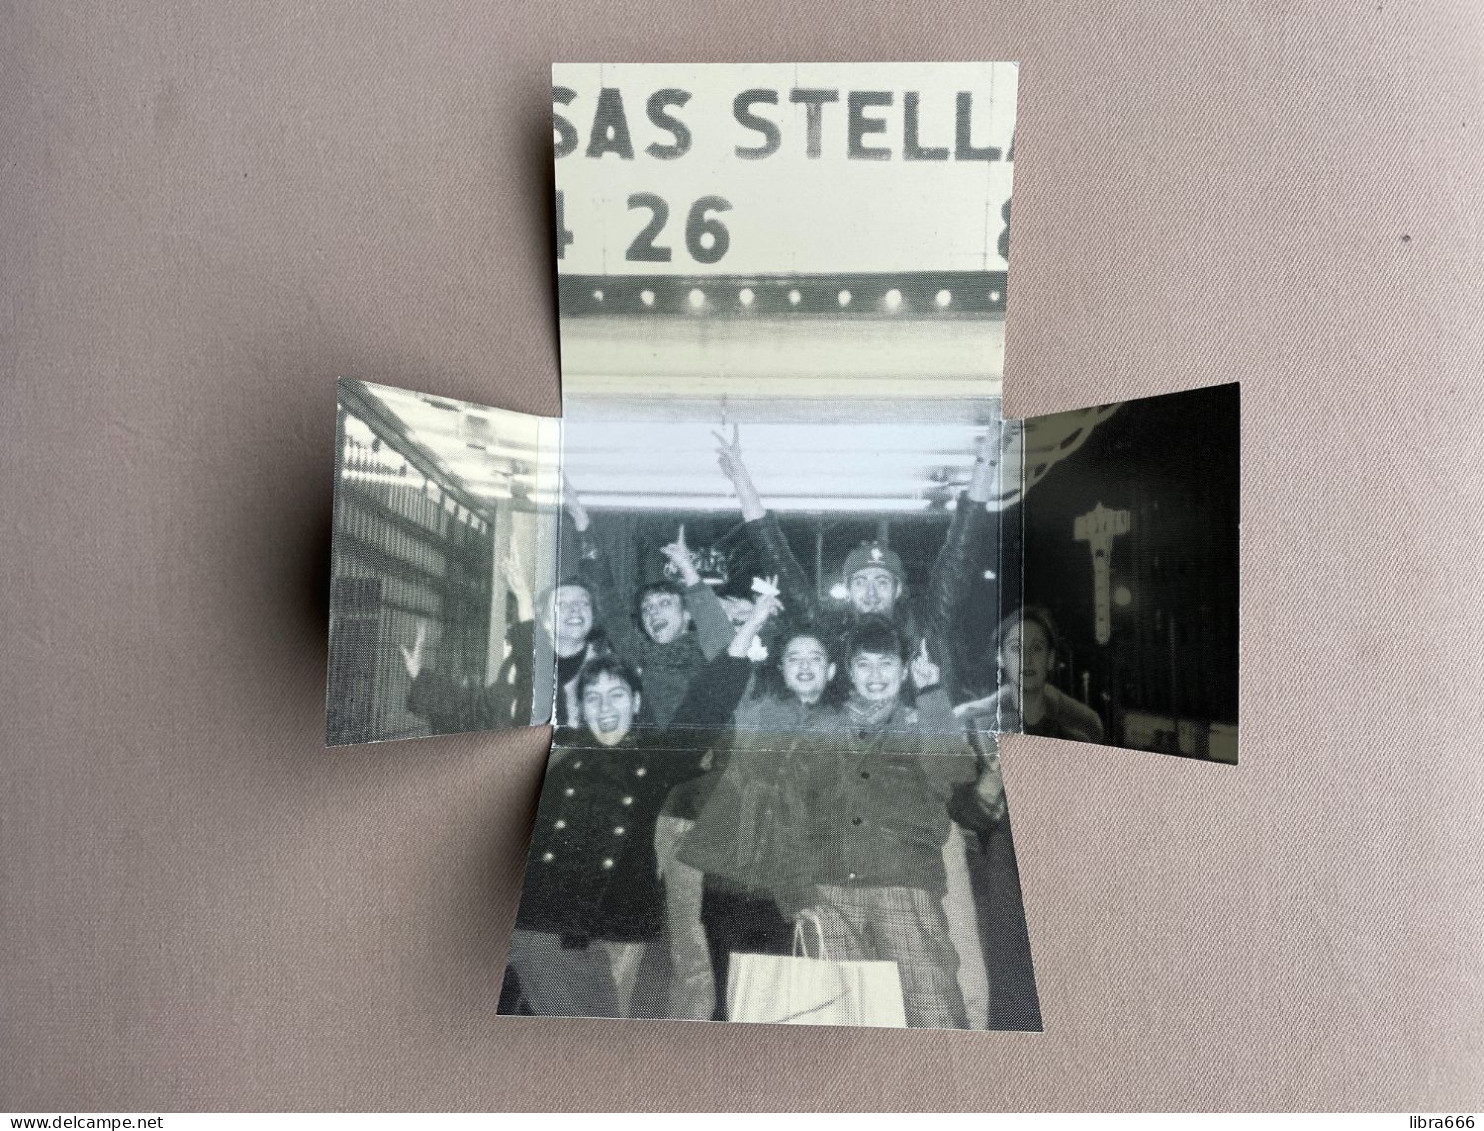 Booklet (10 Cards) - HERMAN SORGELOOS - Rosas / Anne Teresa De Keersmaeker - De Munt, Brussel - Publ. PLAIZIER 1996 - Photographie